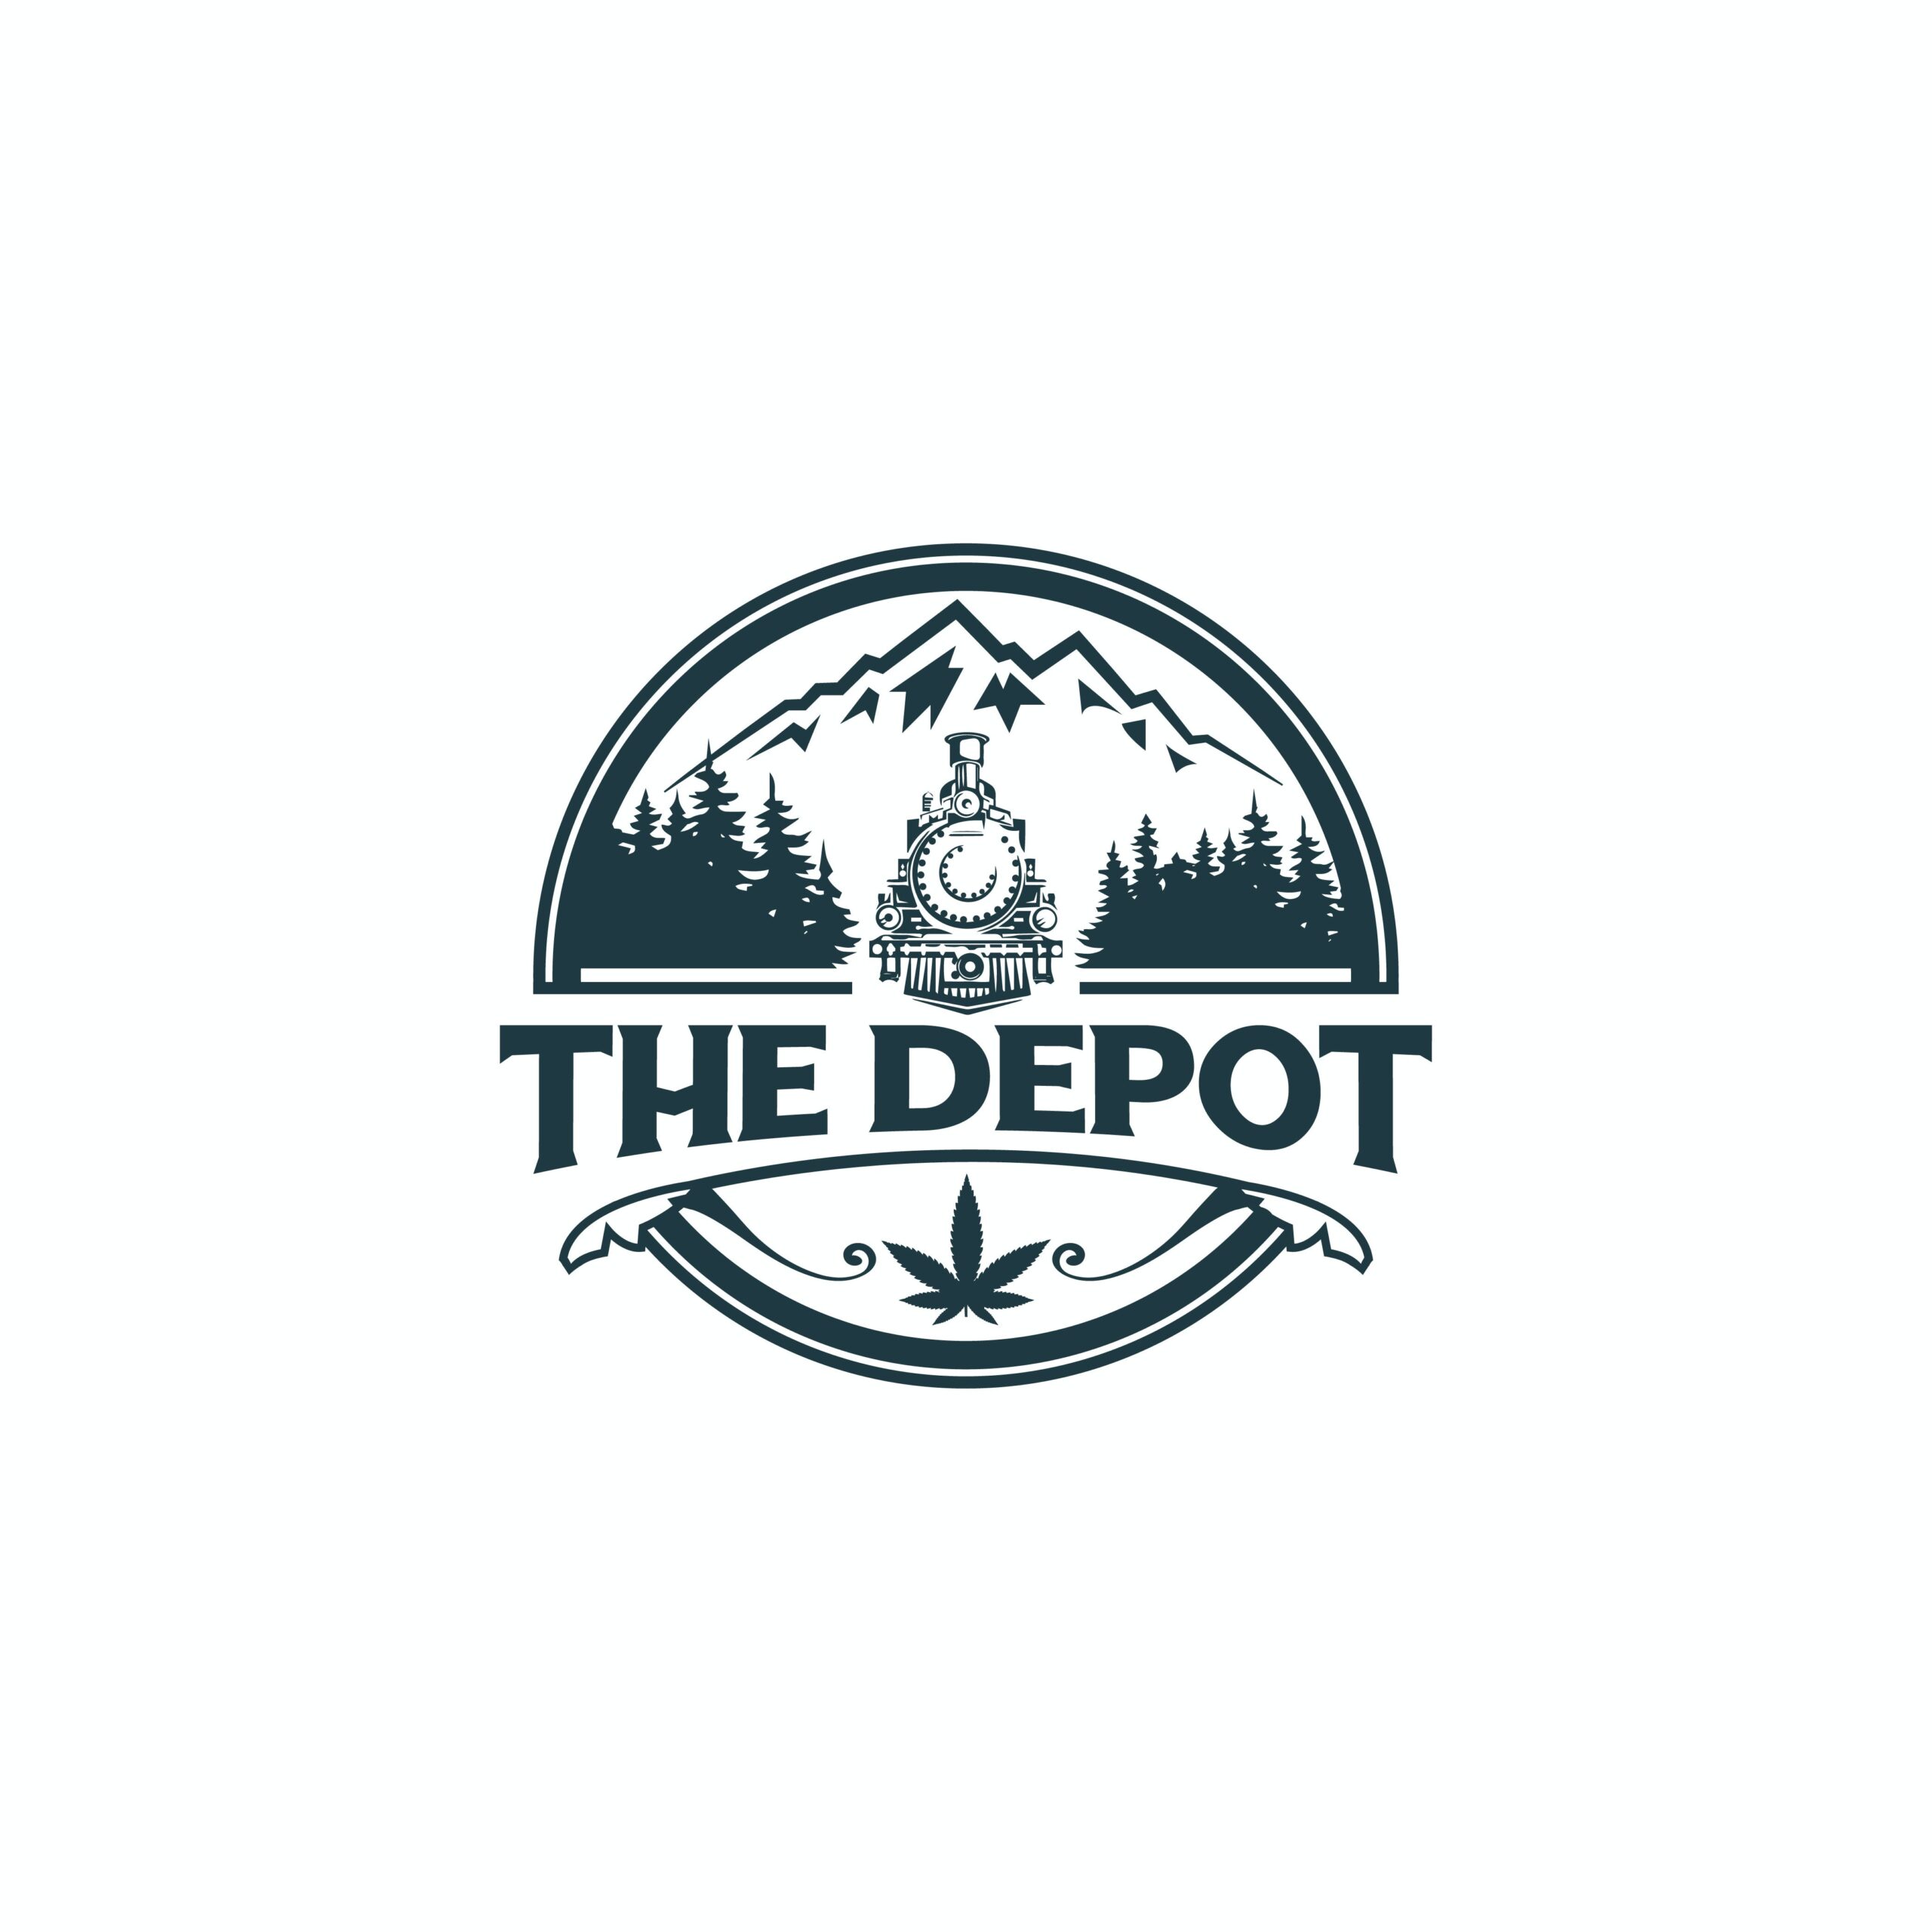 The Depot